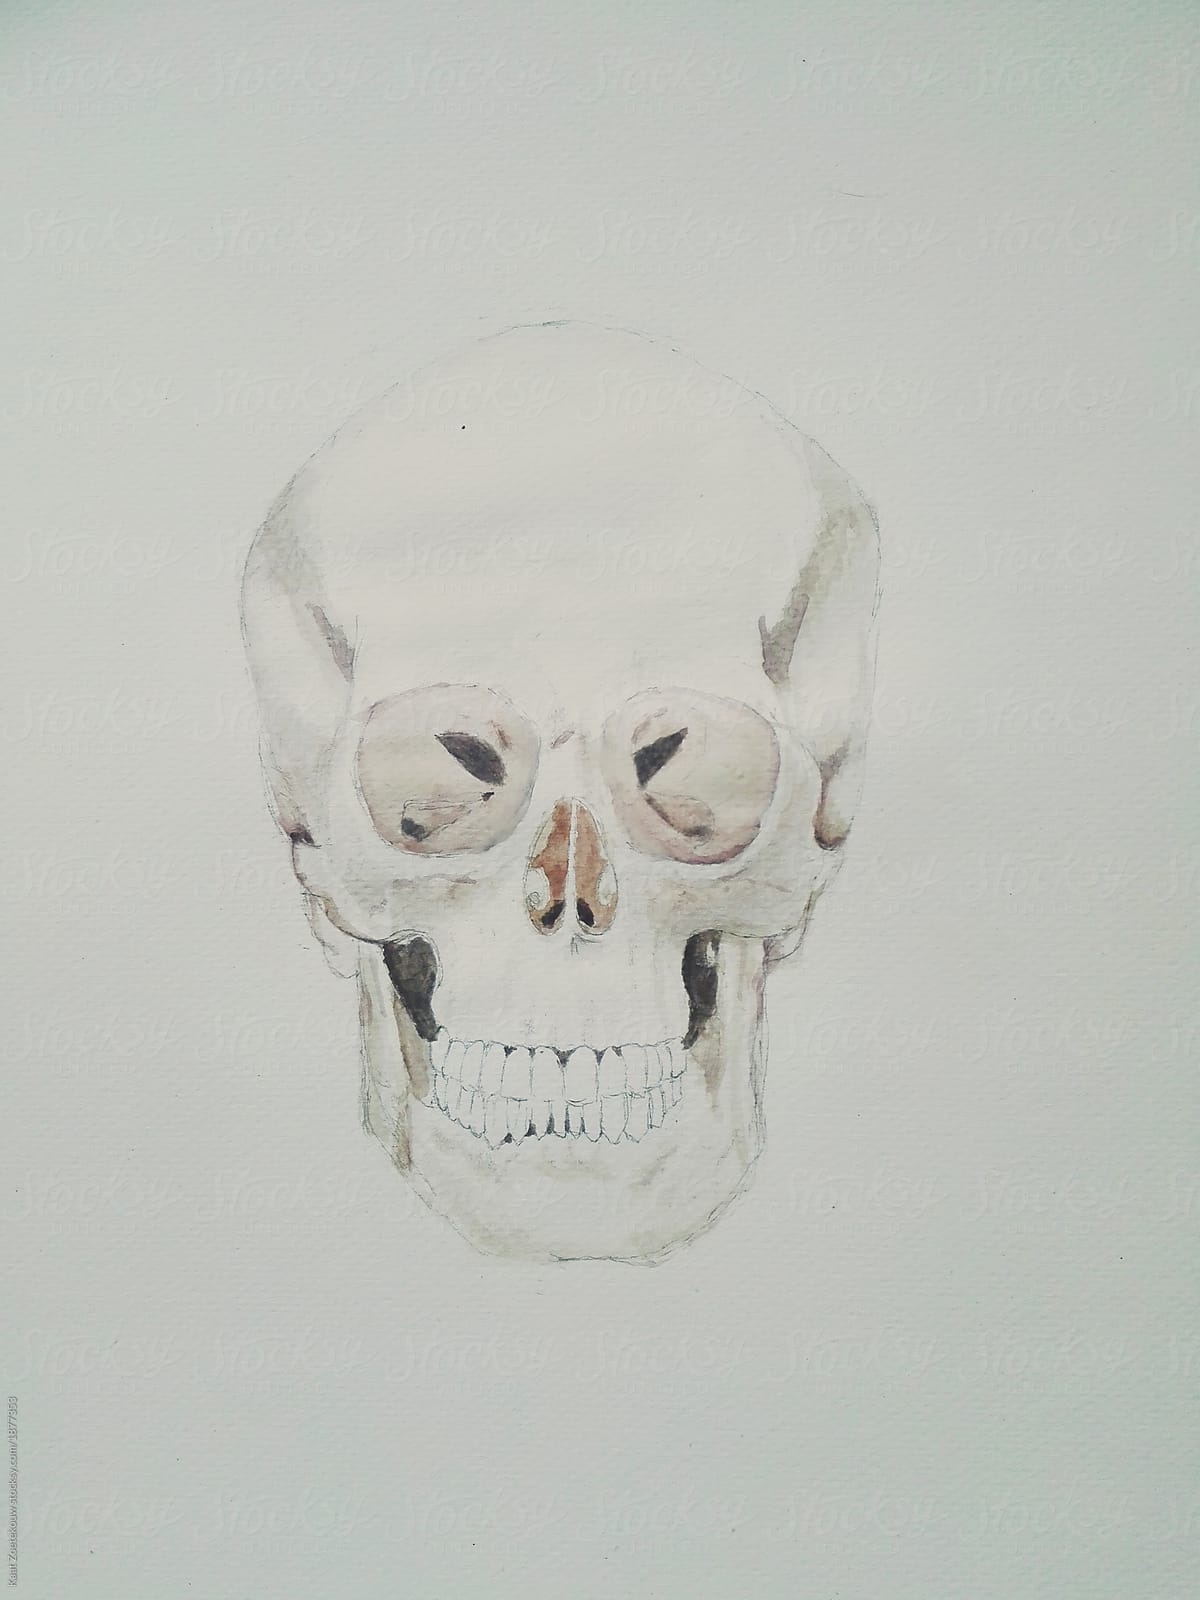 Skull watercolor in progress